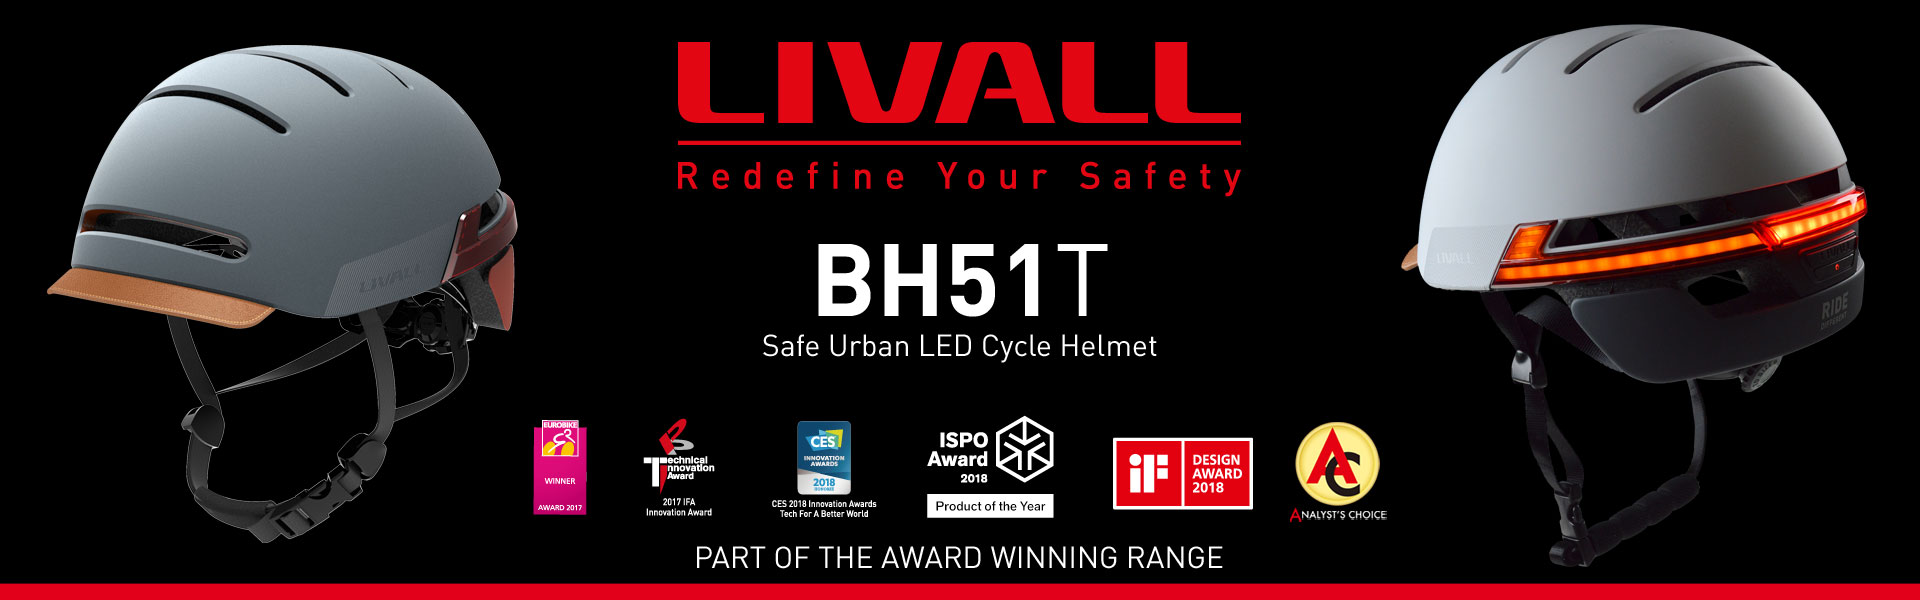 UK Wireless Bluetooth LIVALL 2018 BH51T LED LightsCycle Helmet & Controller 